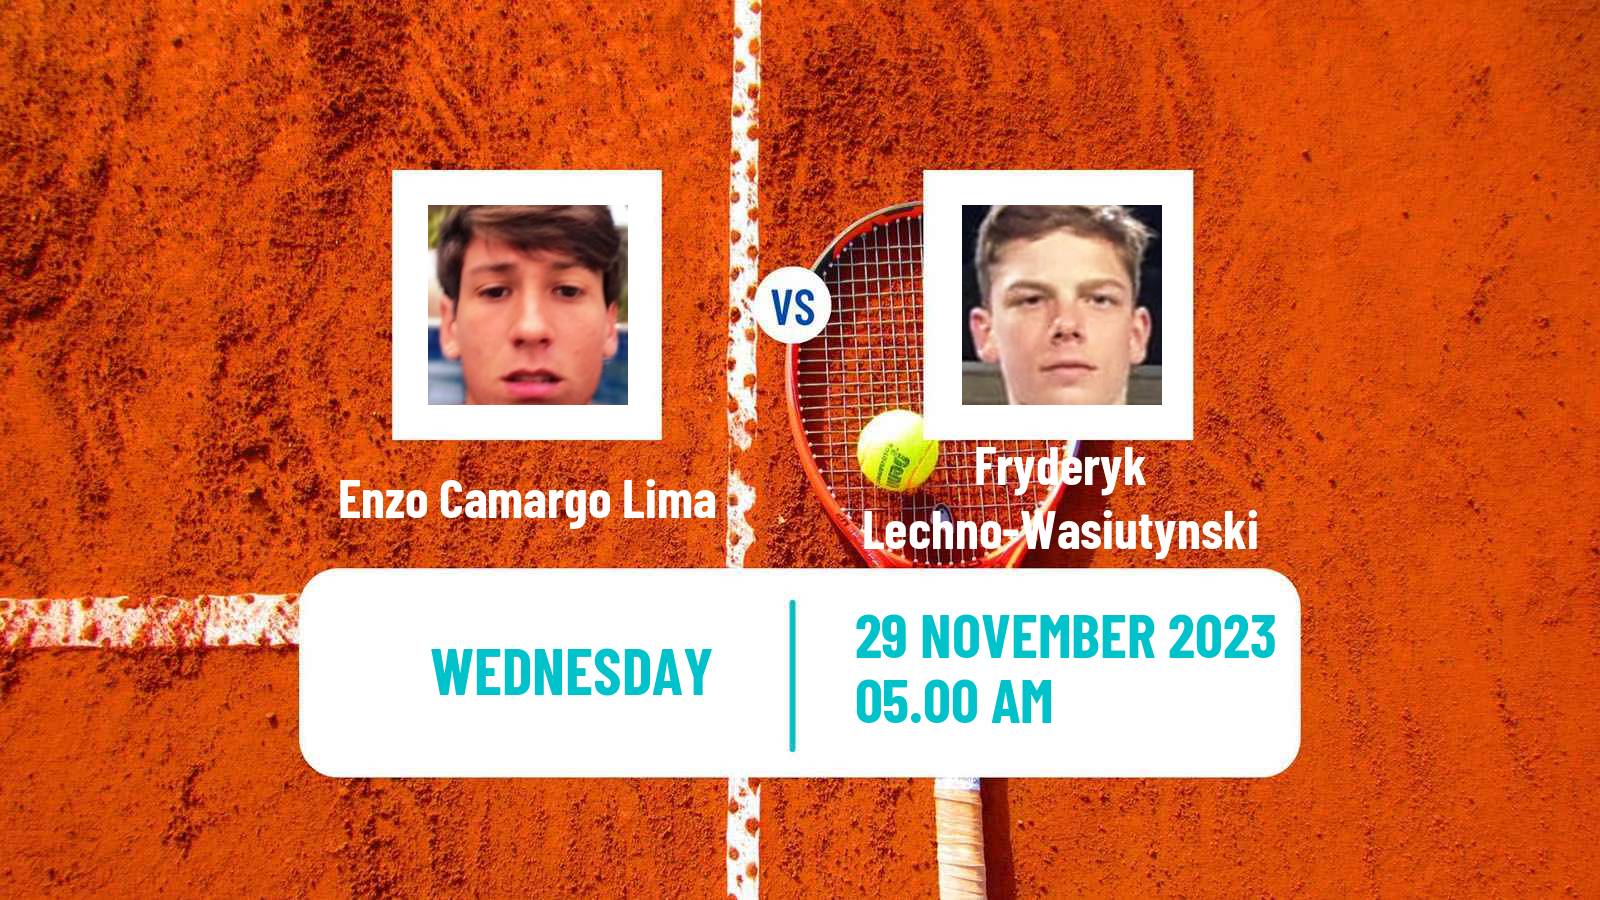 Tennis ITF M15 Monastir 48 Men Enzo Camargo Lima - Fryderyk Lechno-Wasiutynski